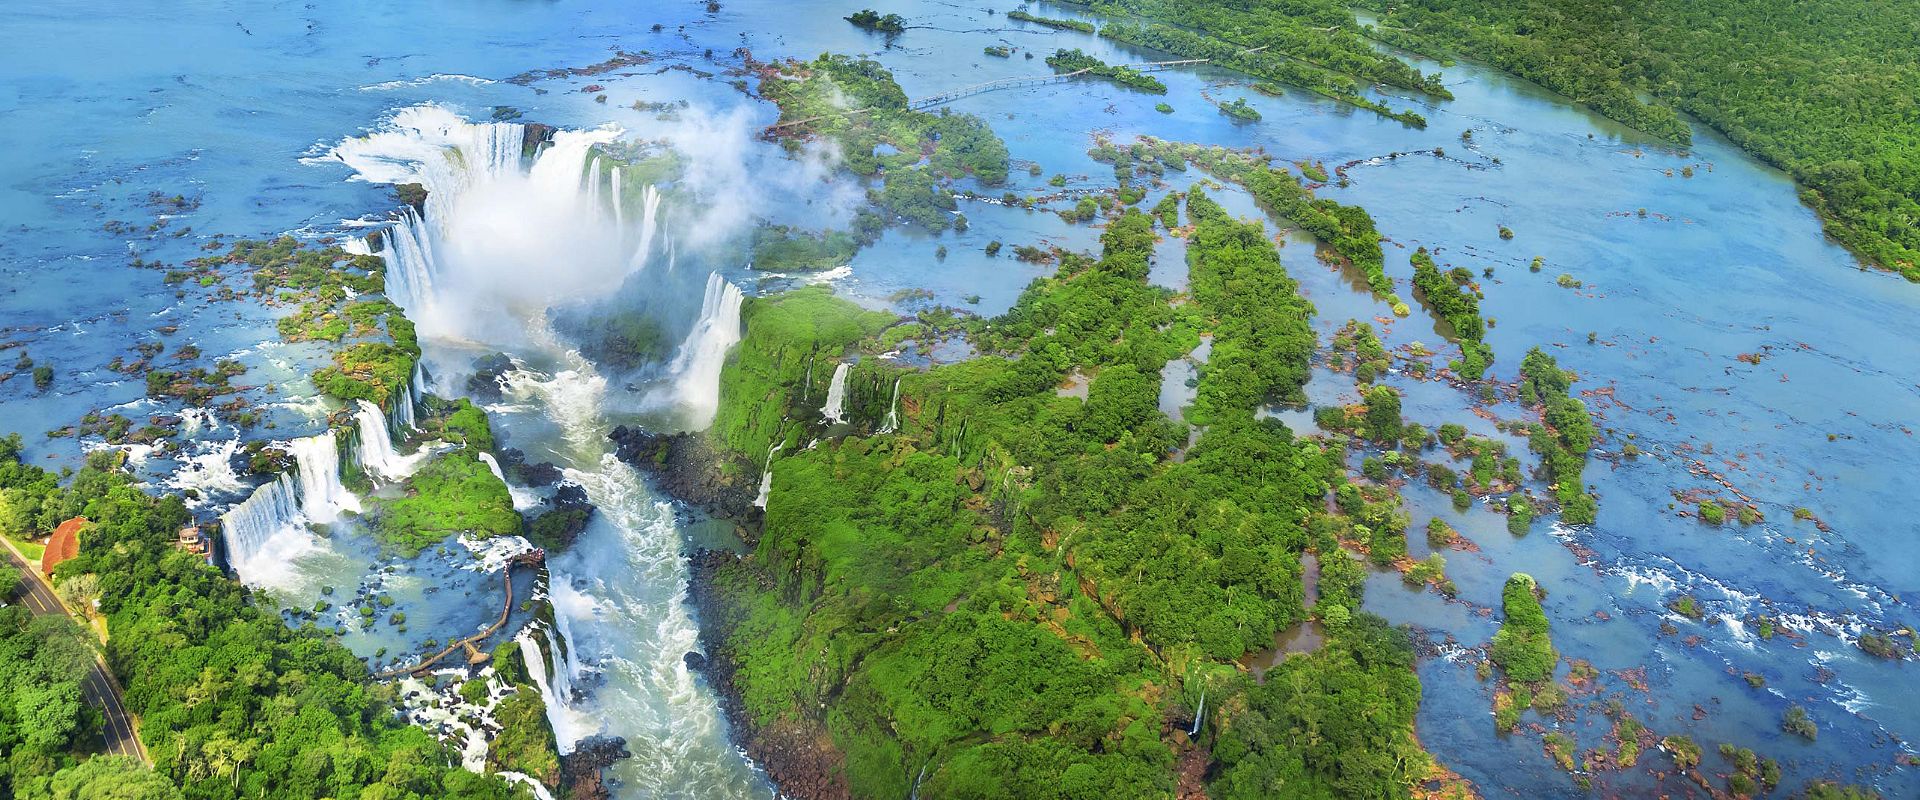 Iguazu Falls Argentina Brazil Daytime